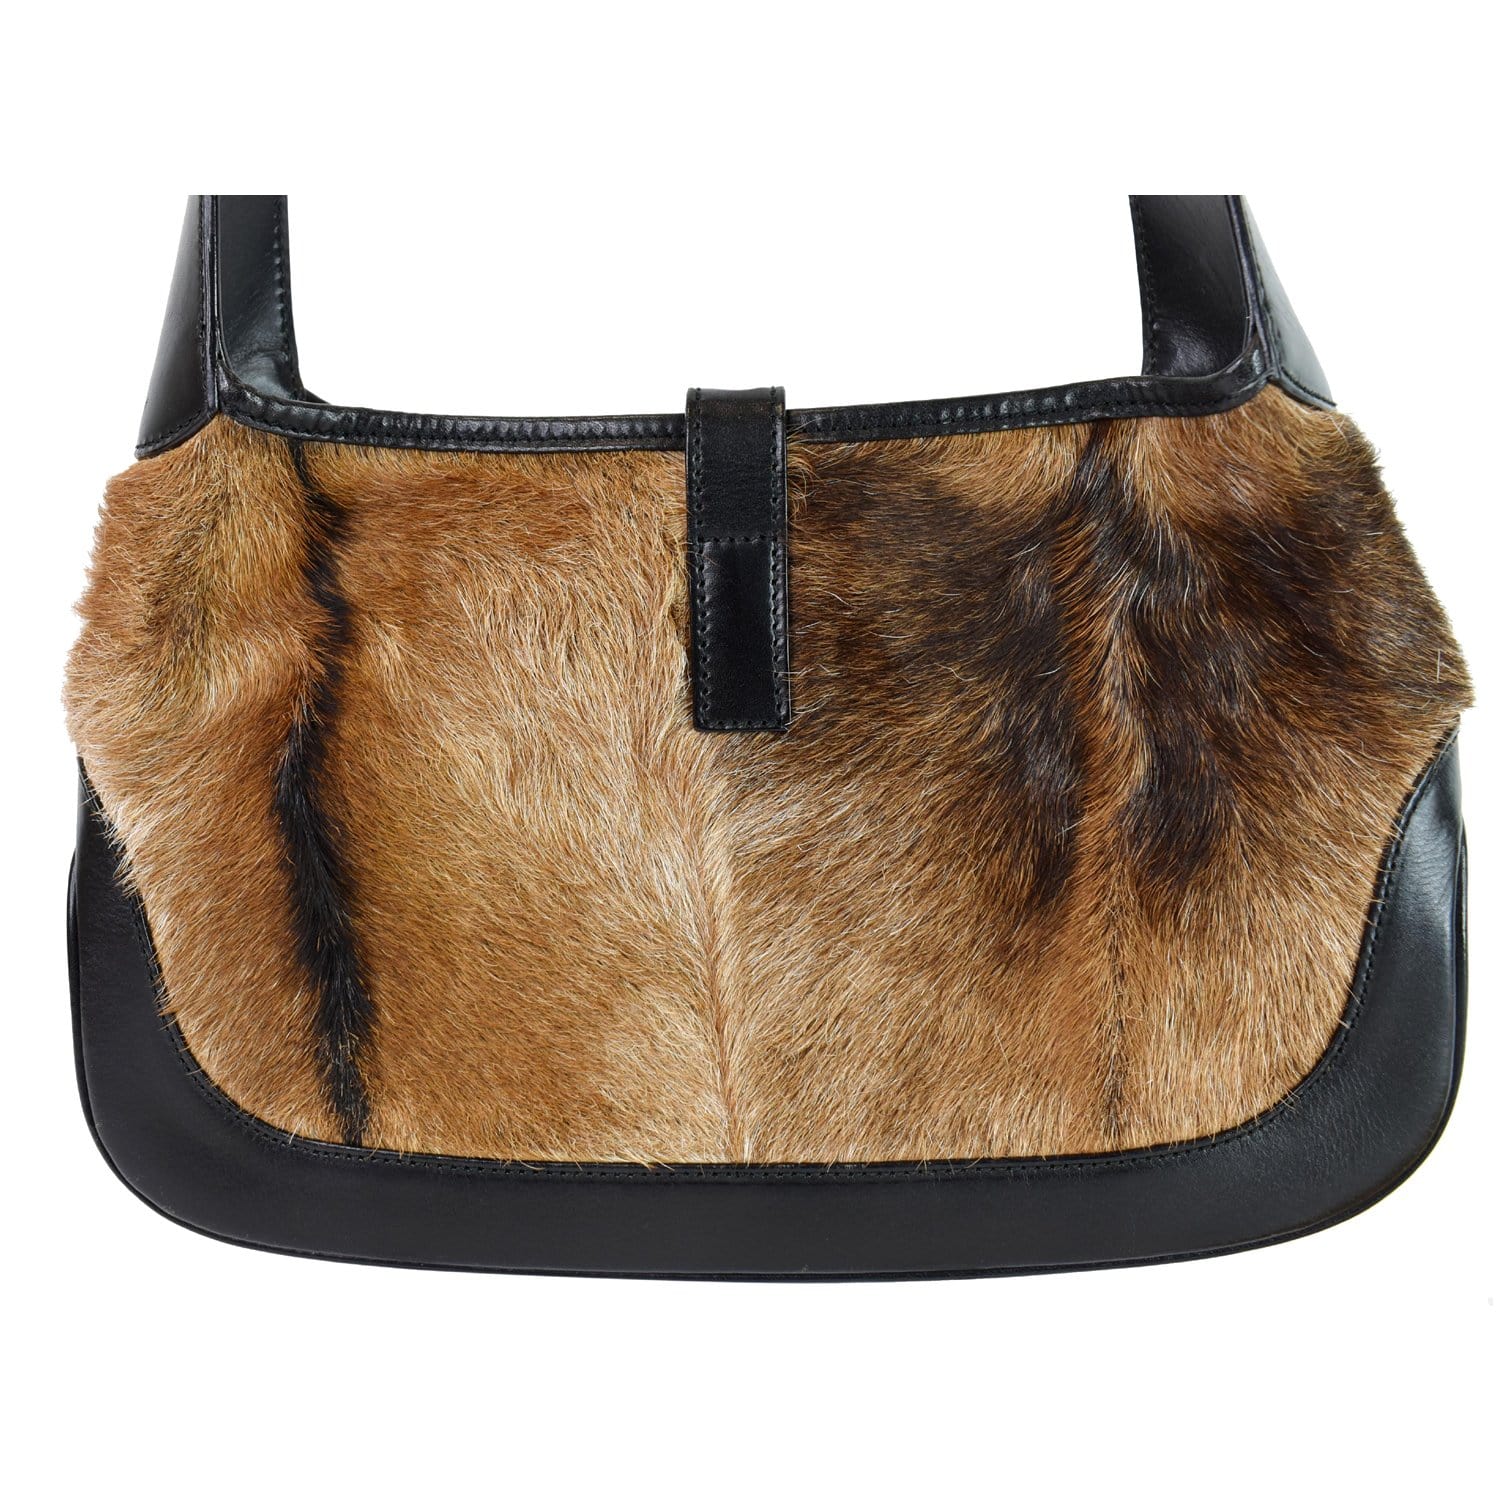 Gucci Jackie O Pony Hair Leather Hobo Shoulder Bag